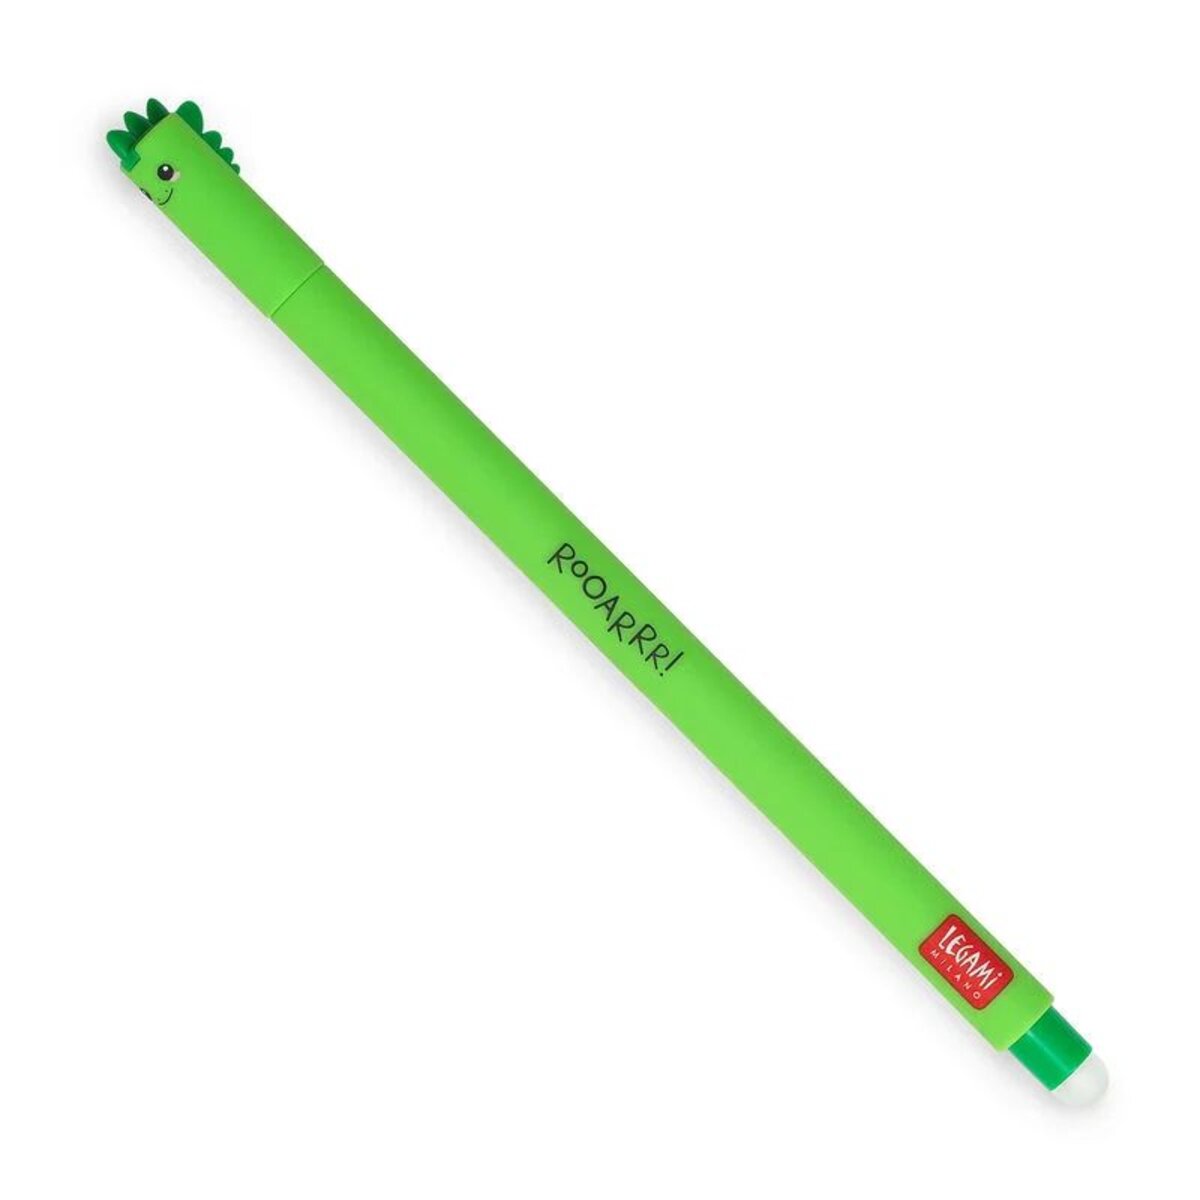 Legami Löschbarer Gelstift - Erasable Pen, grüner Dino